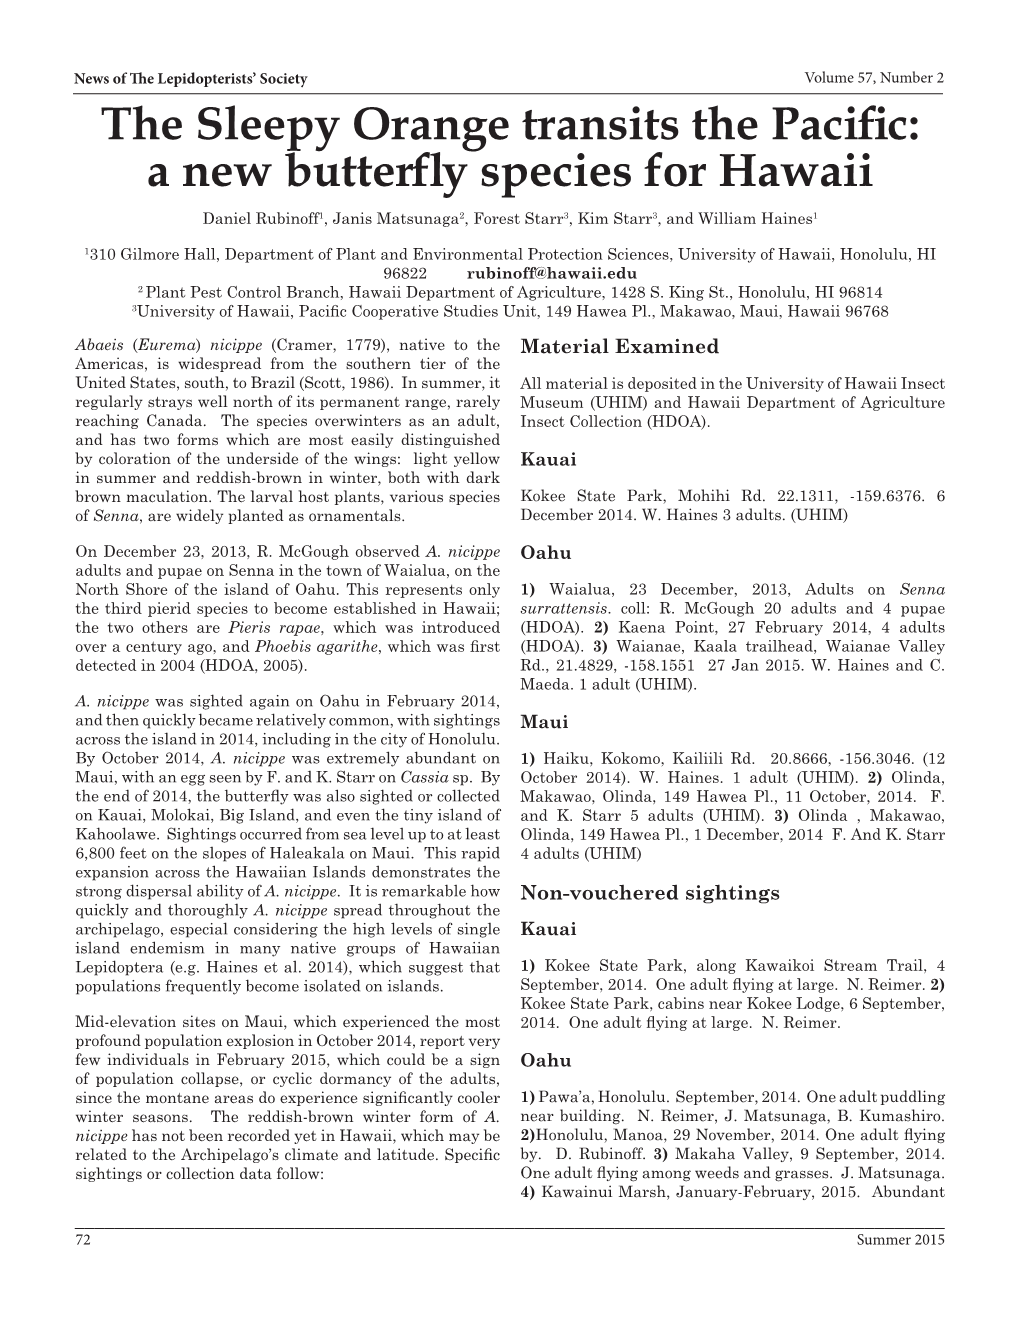 The Sleepy Orange Transits the Paciàc: a New Butteráy Species for Hawaii